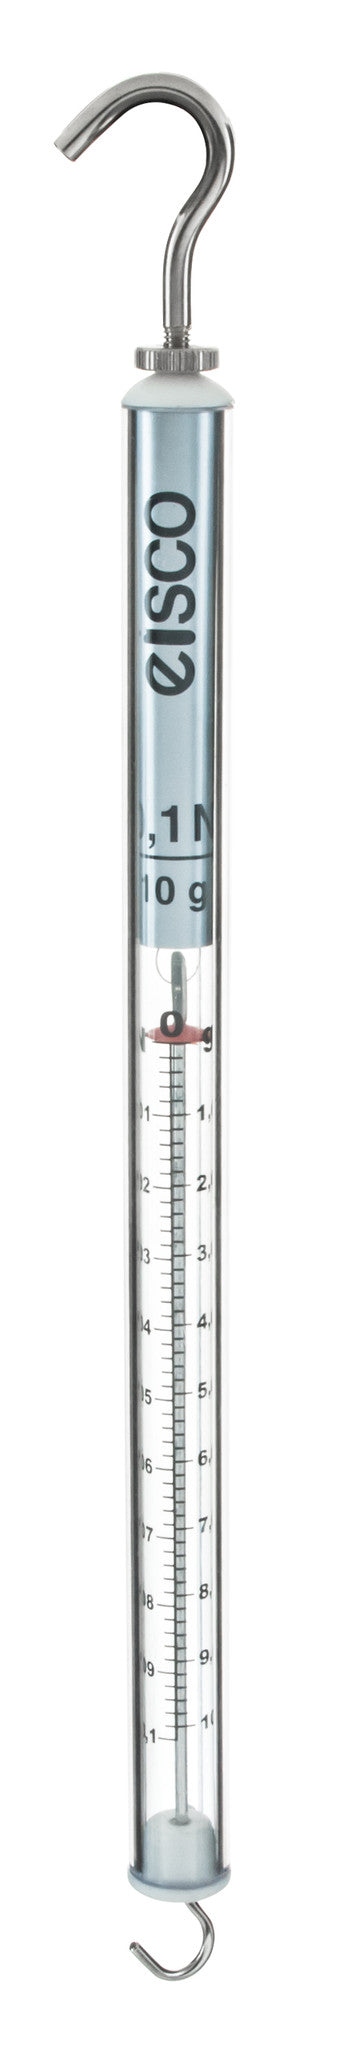 Dynamometer - Premium Range, 0.1N / 10g